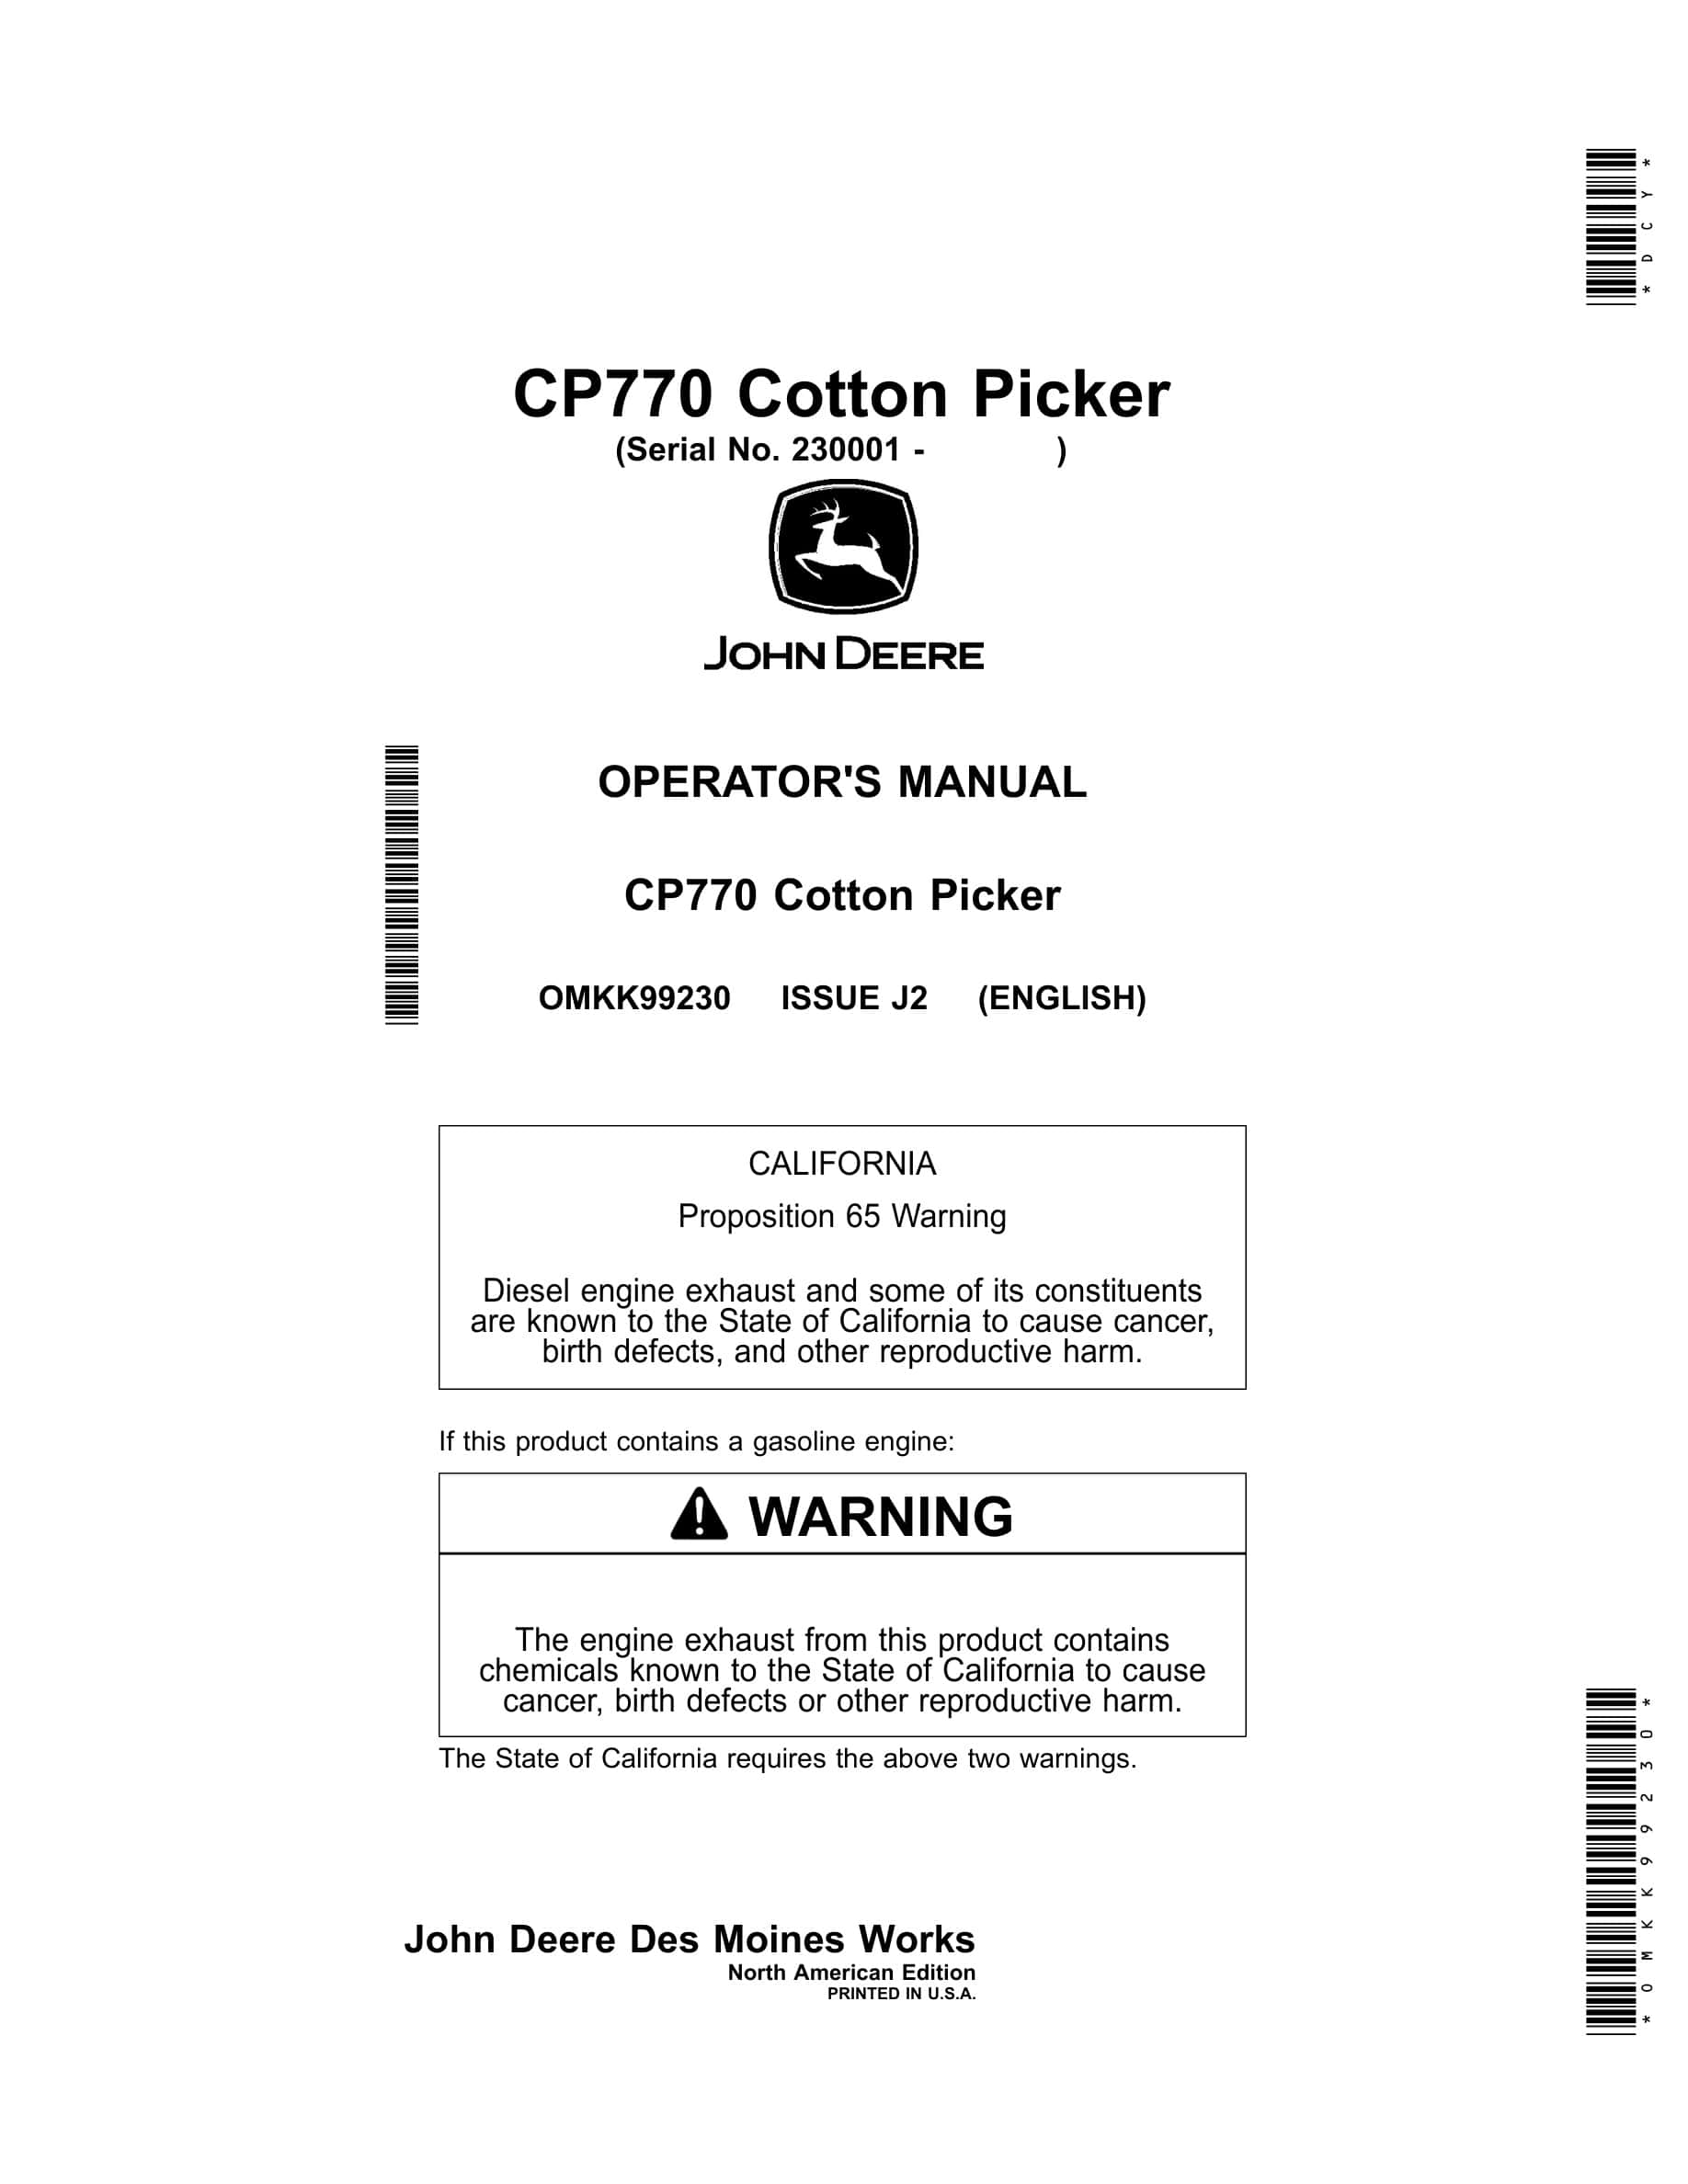 John Deere CP770 Cotton Picker Operator Manual OMKK99230-1